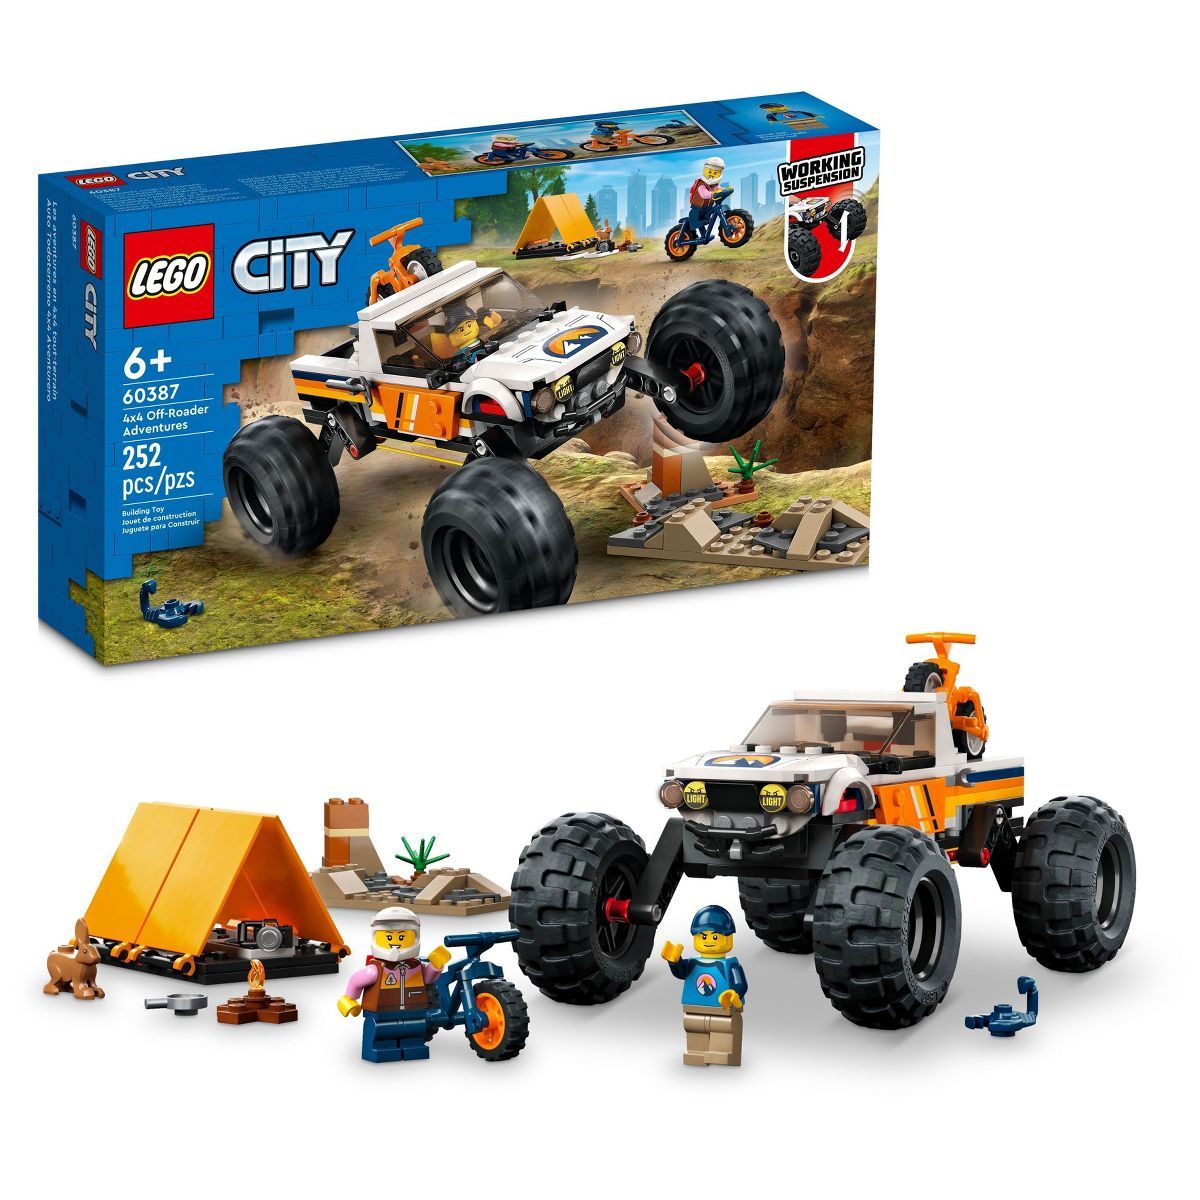 LEGO City 4x4 Off-Roader Adventures Monster Truck Toy 60387 | Target